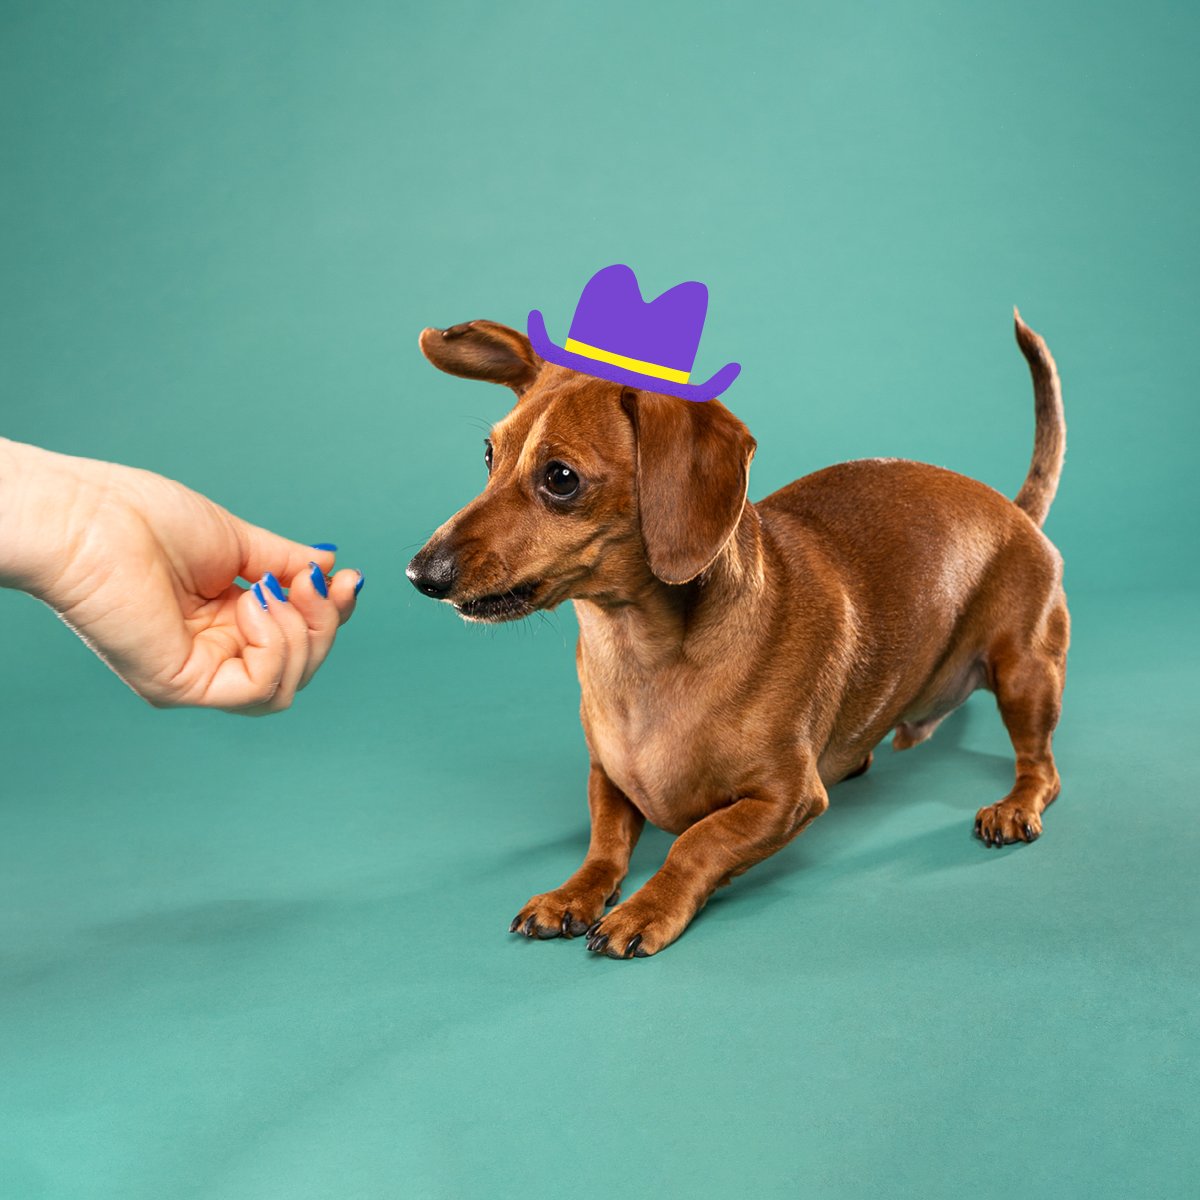 5 tricks every dachshund should know